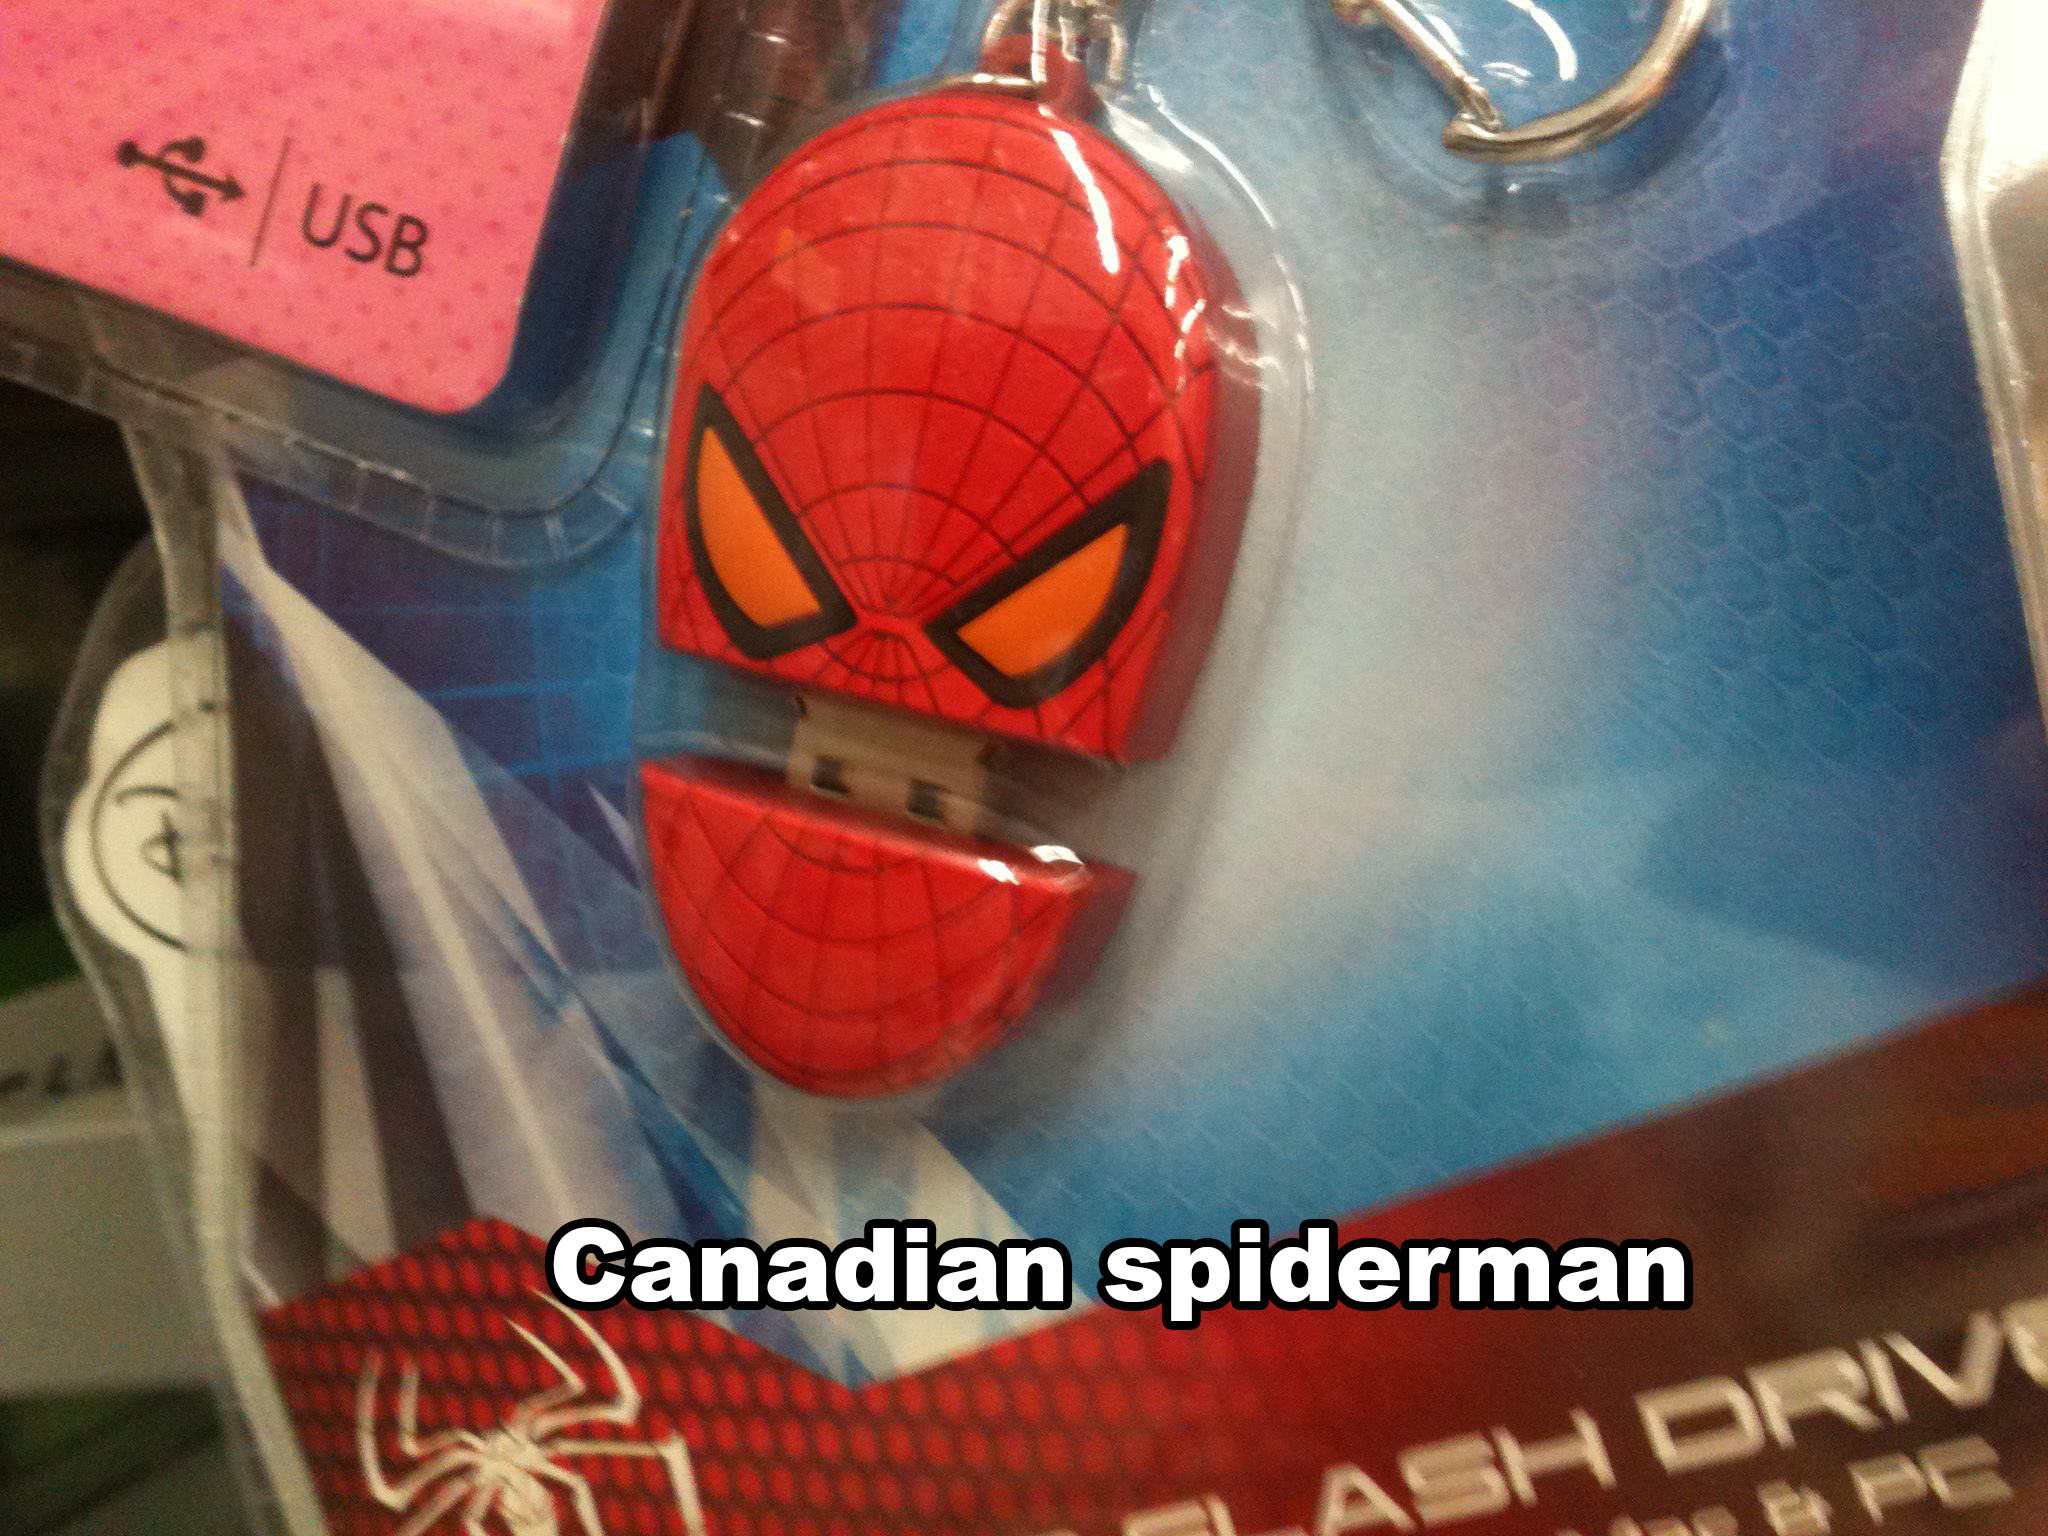 canadian spiderman - Usb Canadian spiderman Ash Drive